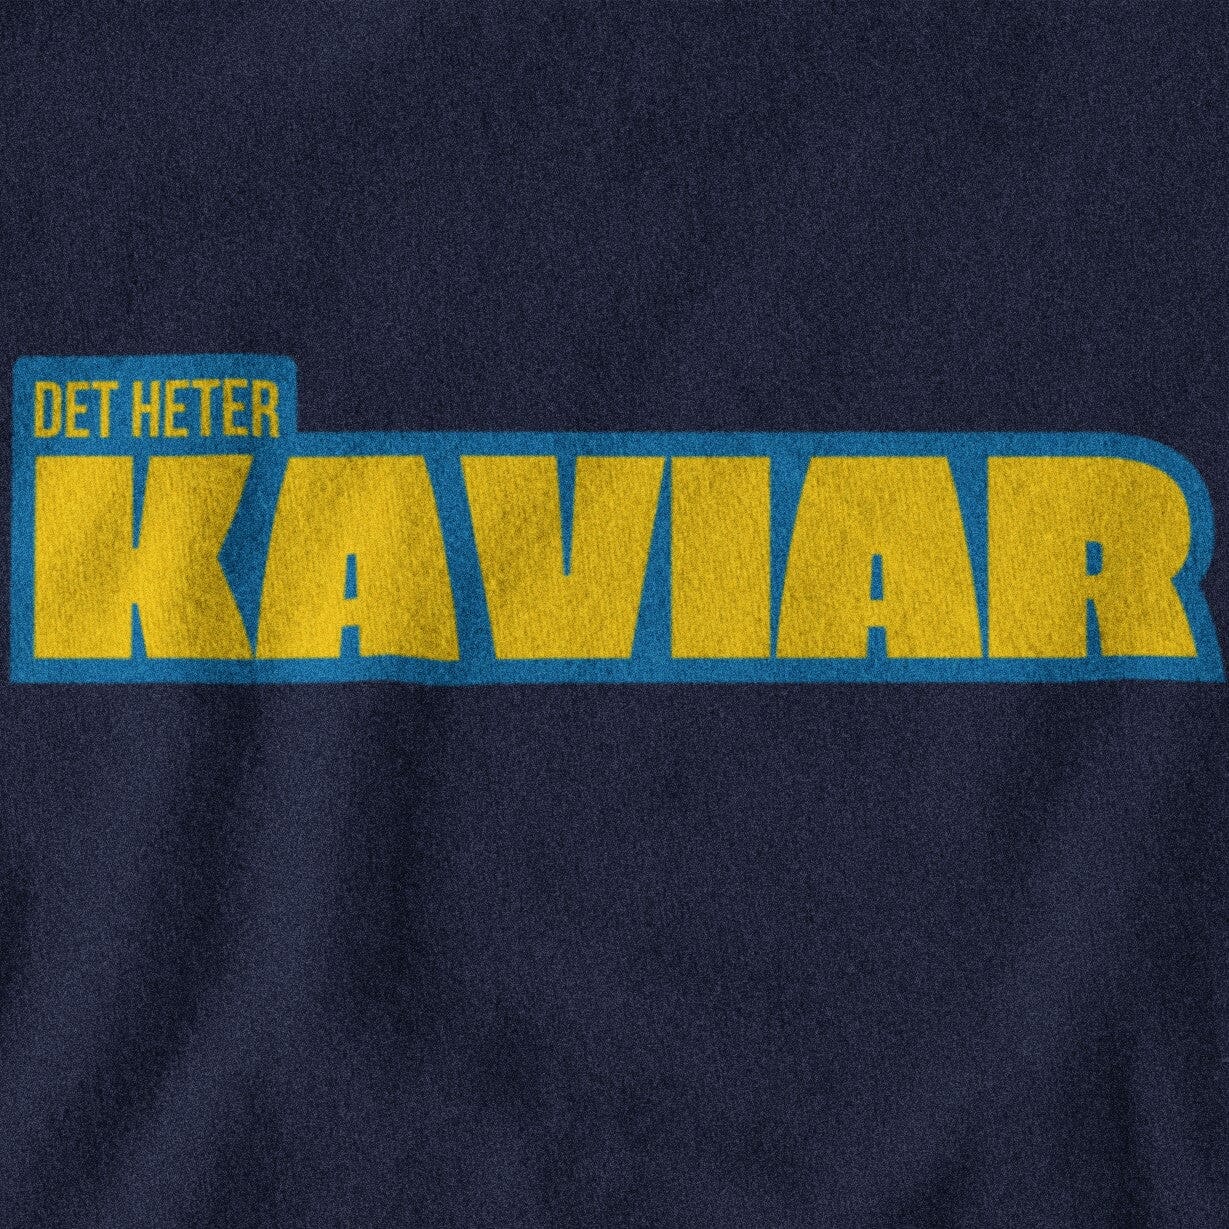 Kaviar - T-shirt 